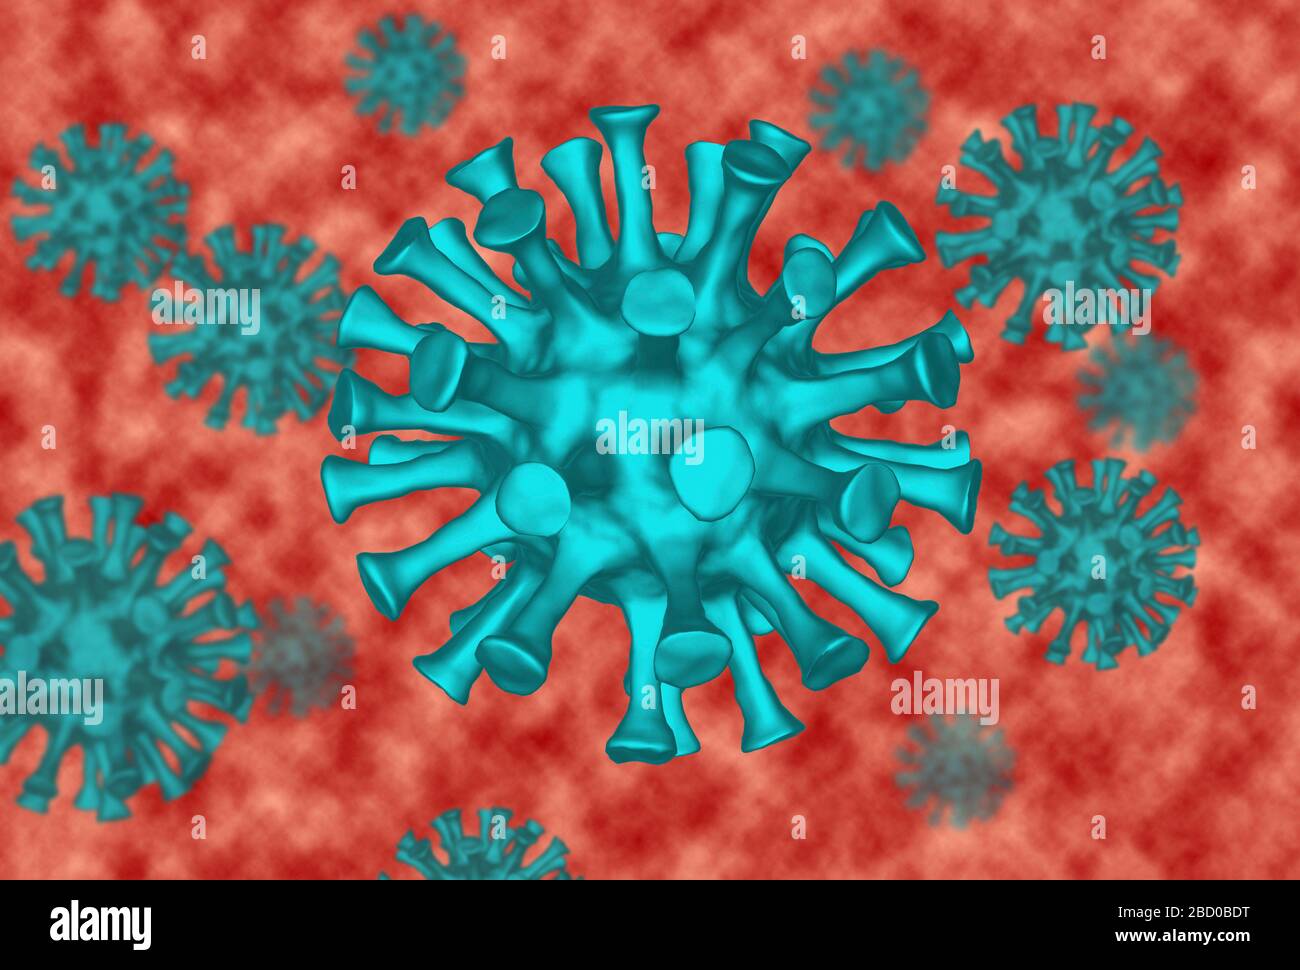 3d model of a corona virus / covid 19  RNA virus pathogen against a colourful background Stock Photo